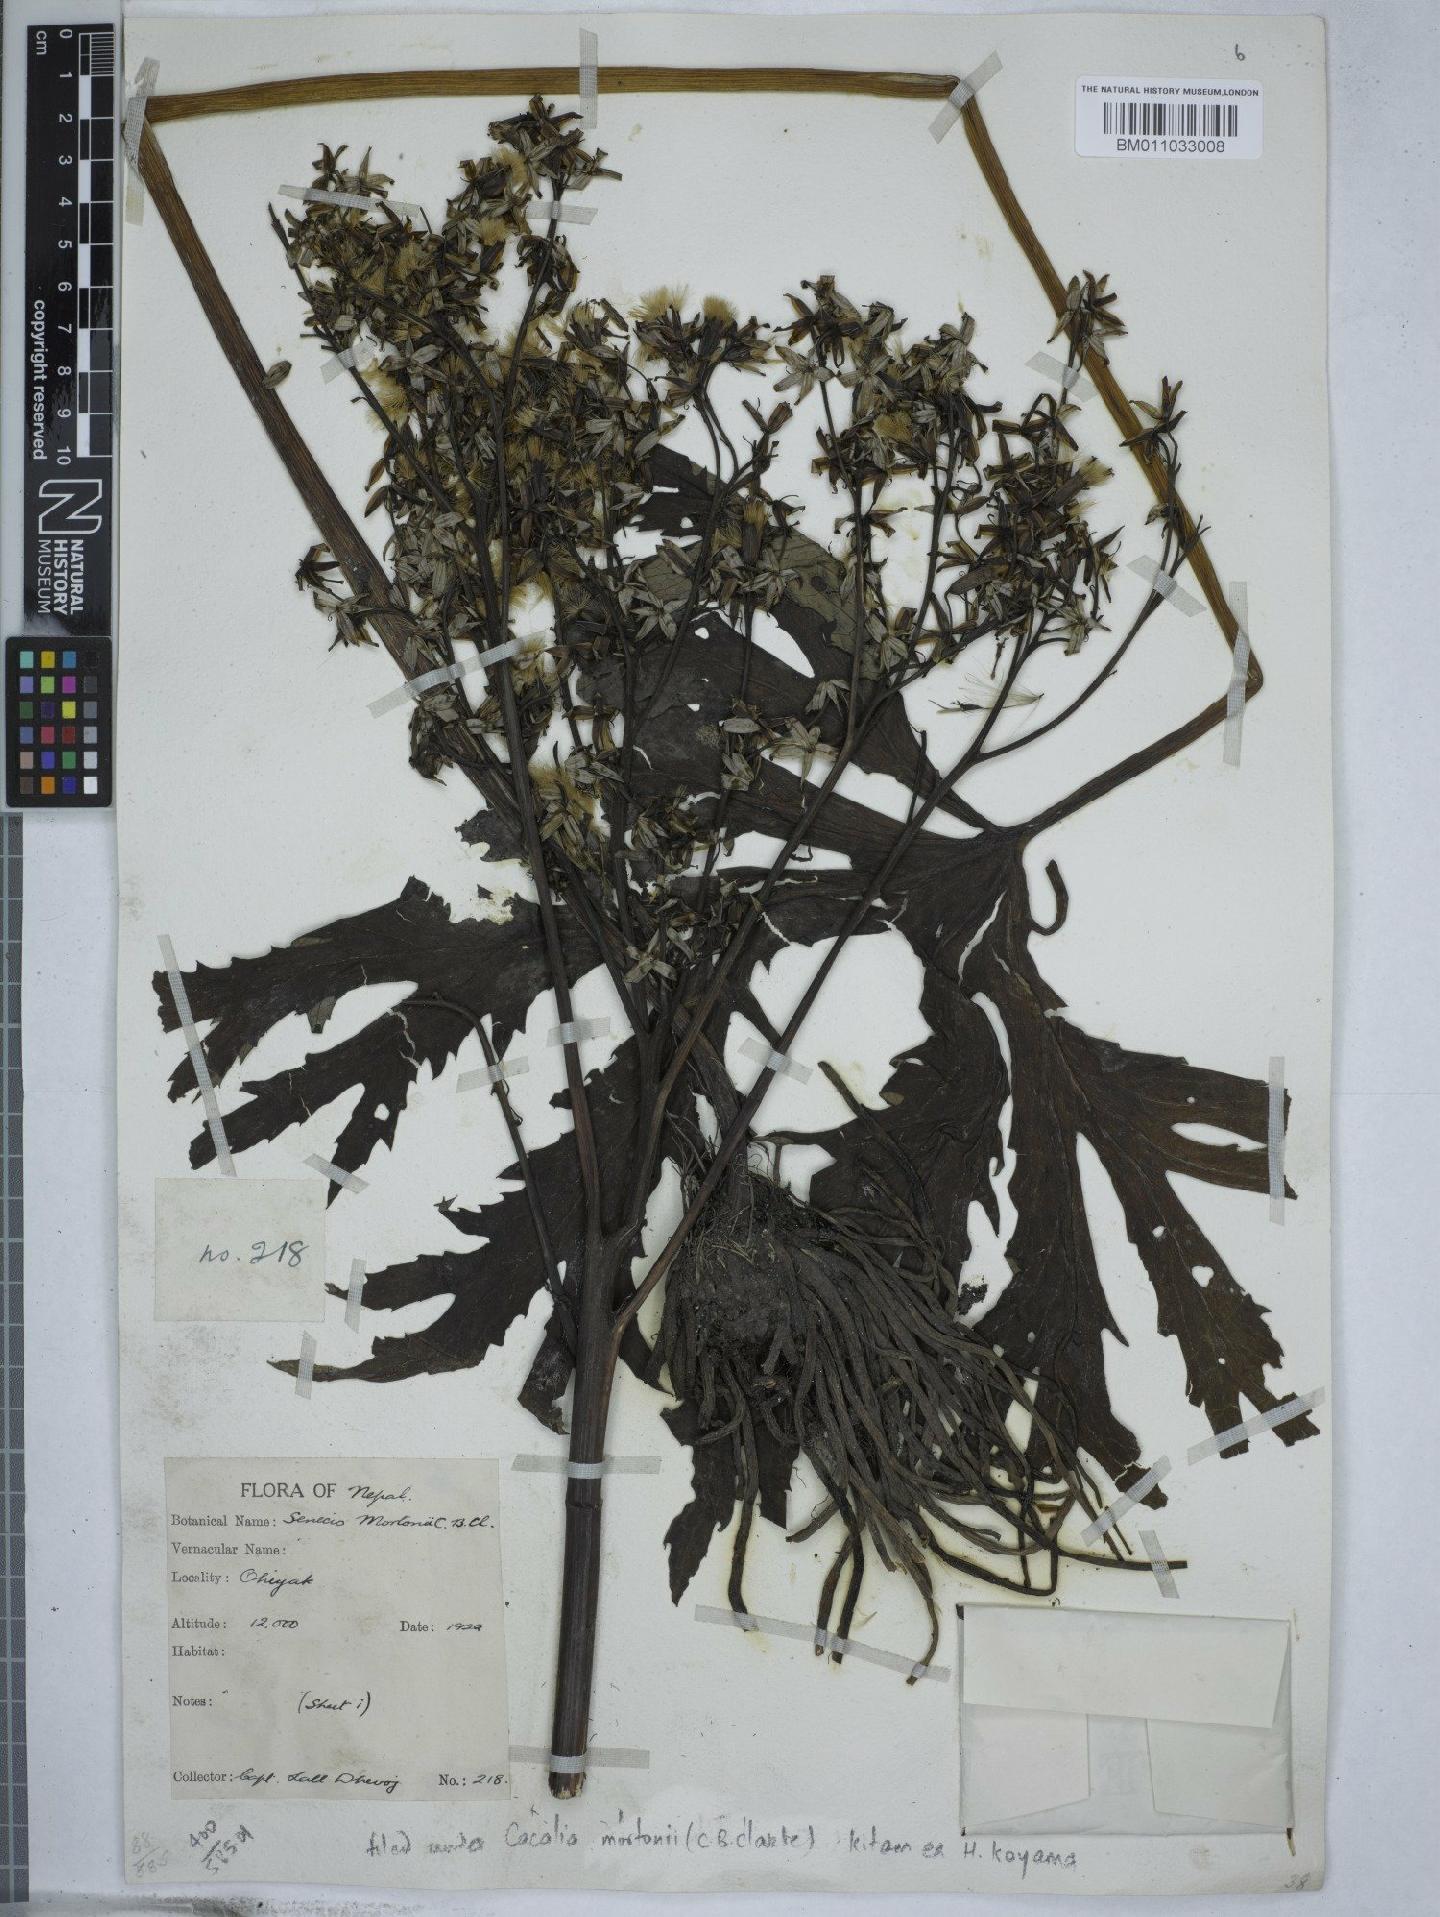 To NHMUK collection (Cacalia mortonii C.B.Clarke; NHMUK:ecatalogue:9156635)